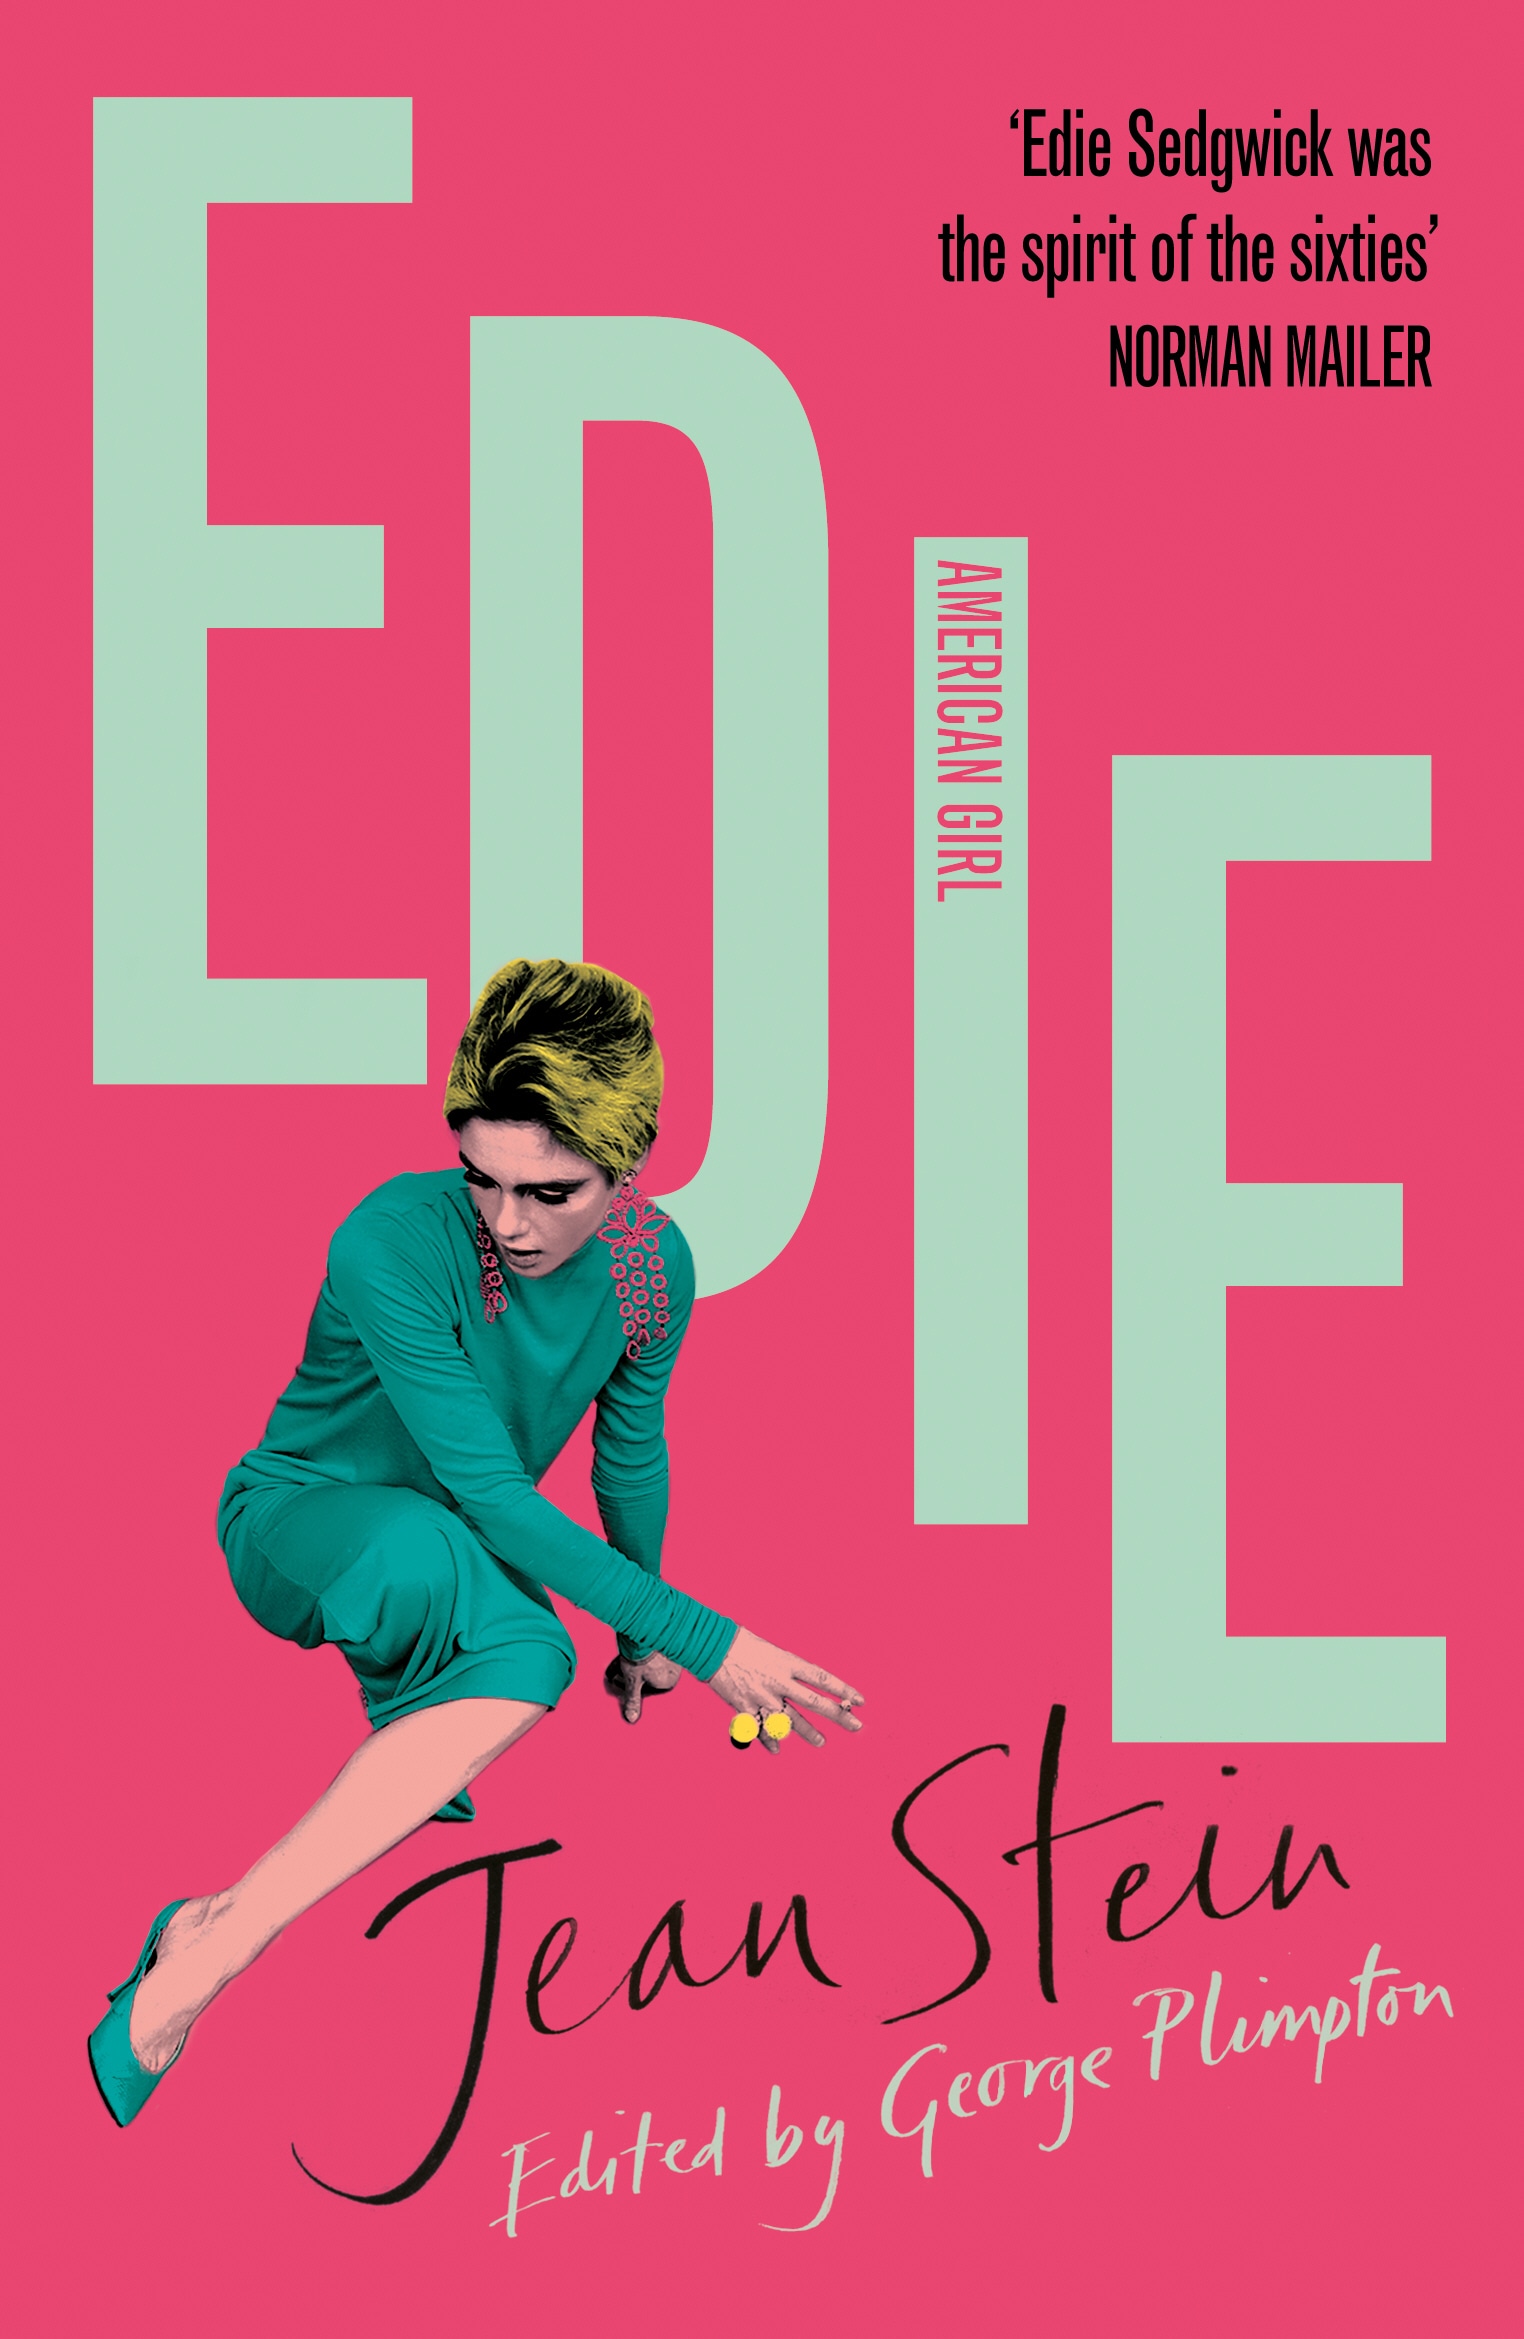 Book “Edie” by Jean Stein — February 6, 2020